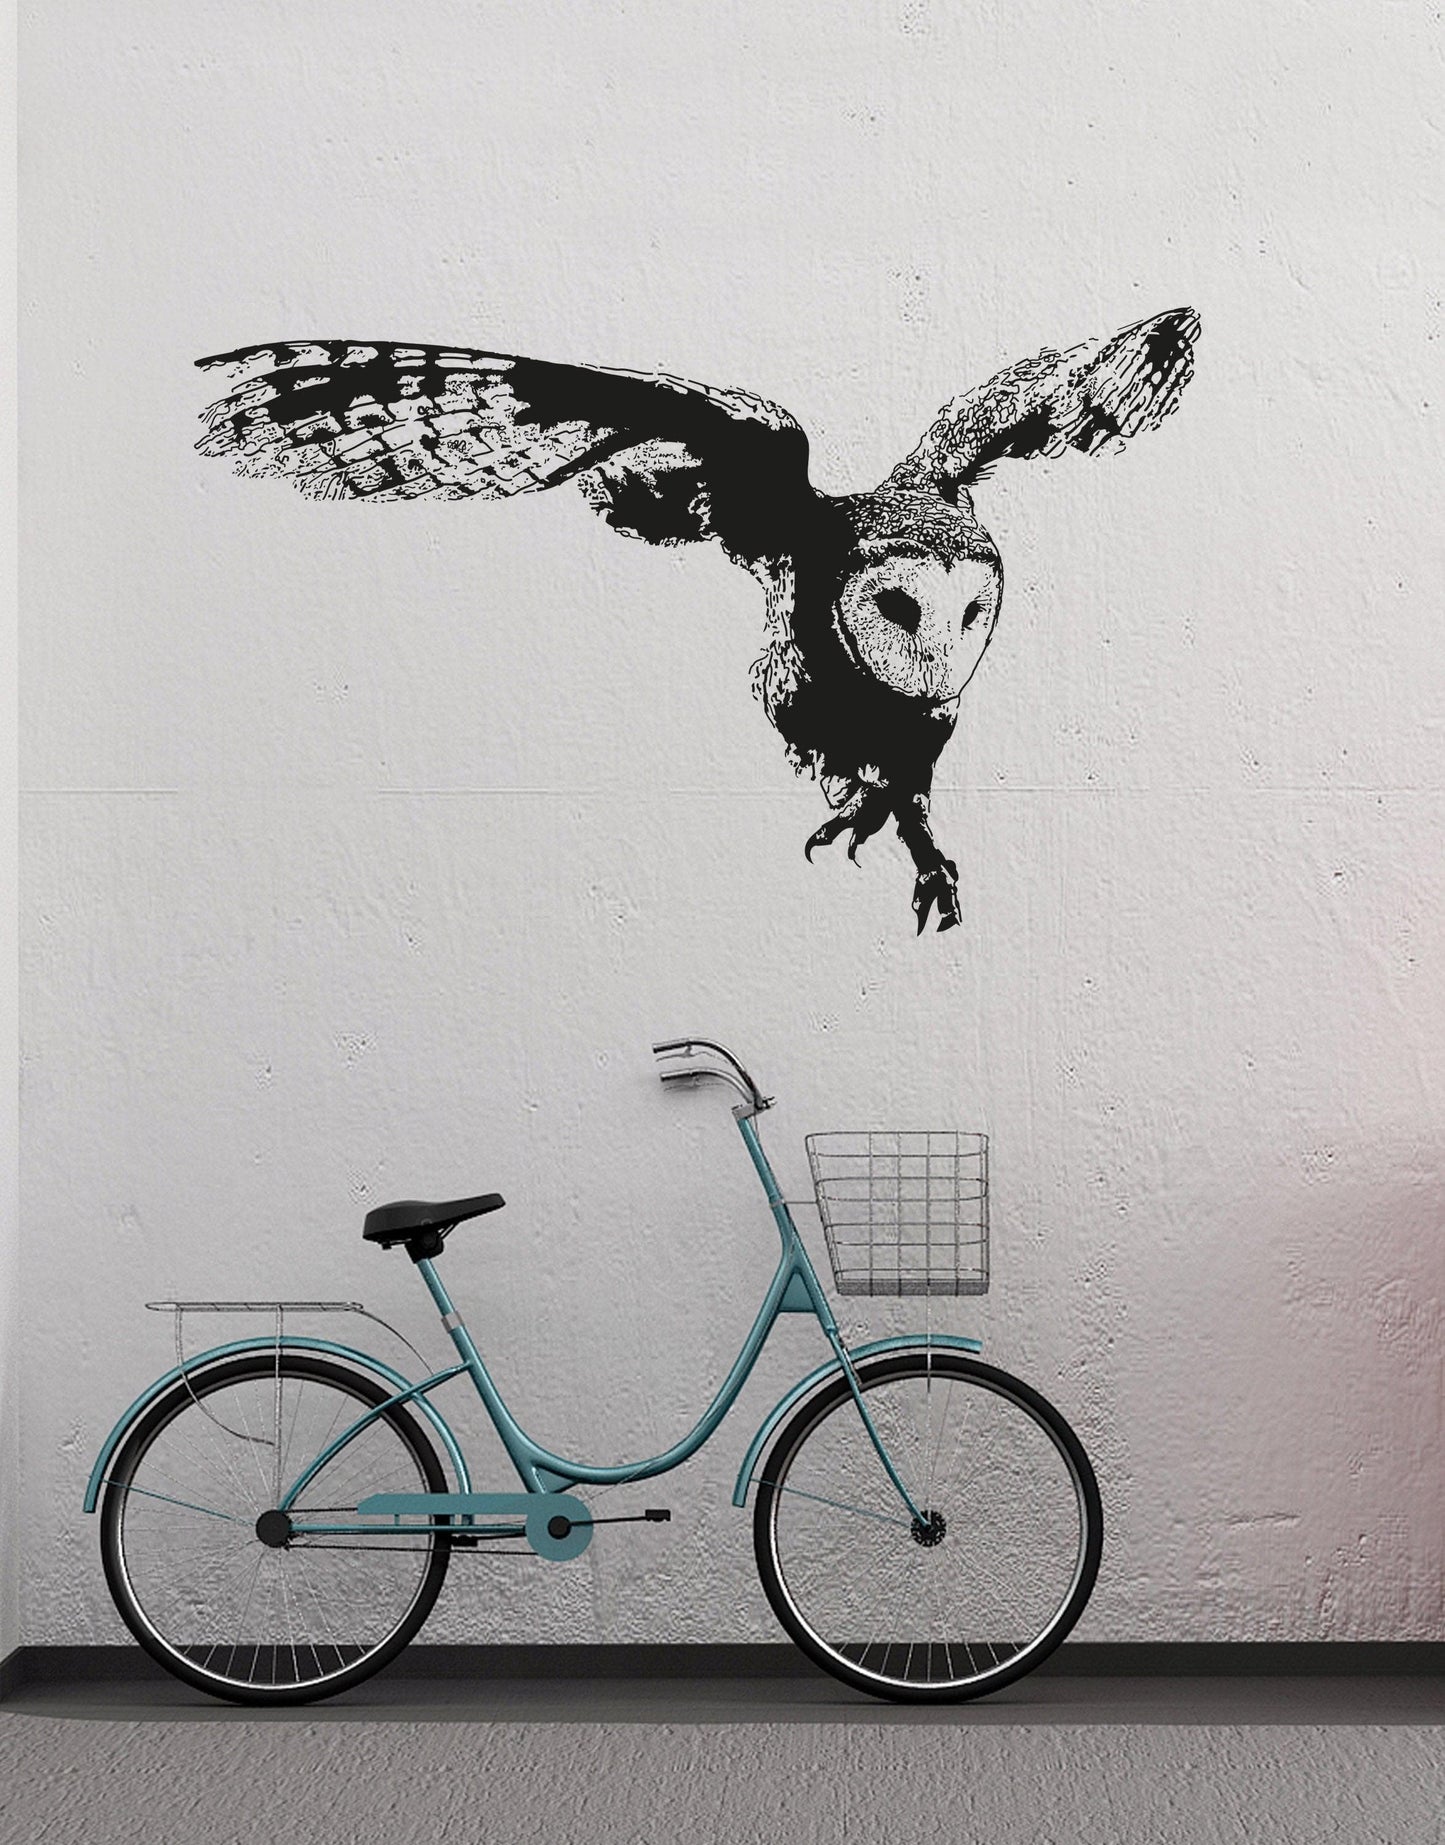 Australian Owl Flying Vinyl Wall Decal Sticker. Kid's Bedroom / Nursery Home Decor. #OS_AA496